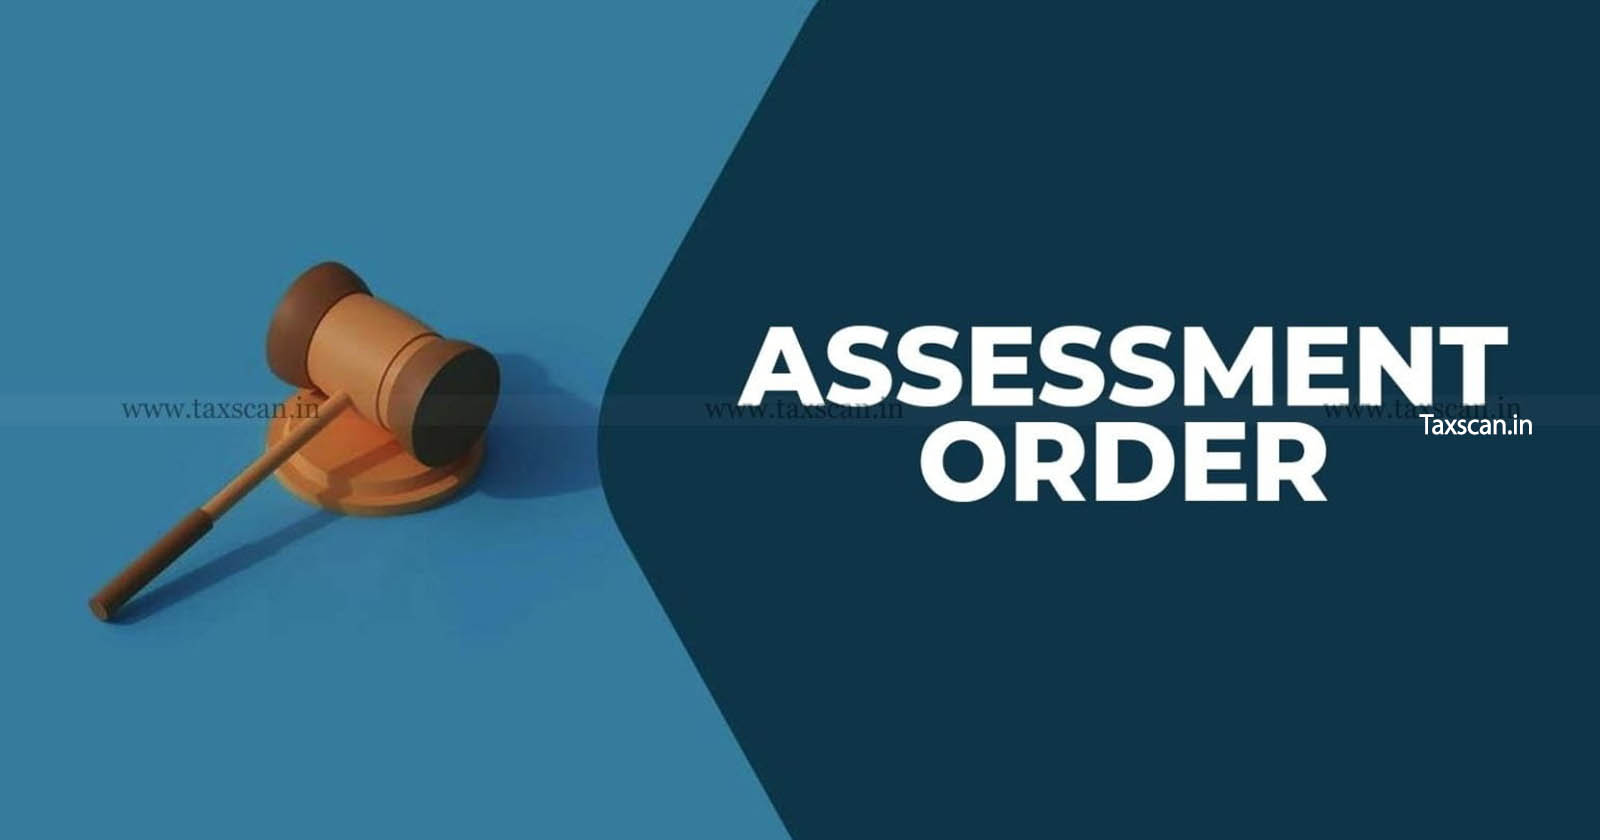 Assessment- order - erroneous-cash-deposit - reassessment- proceeding-ITAT - grounds - lack - jurisdiction -taxscan